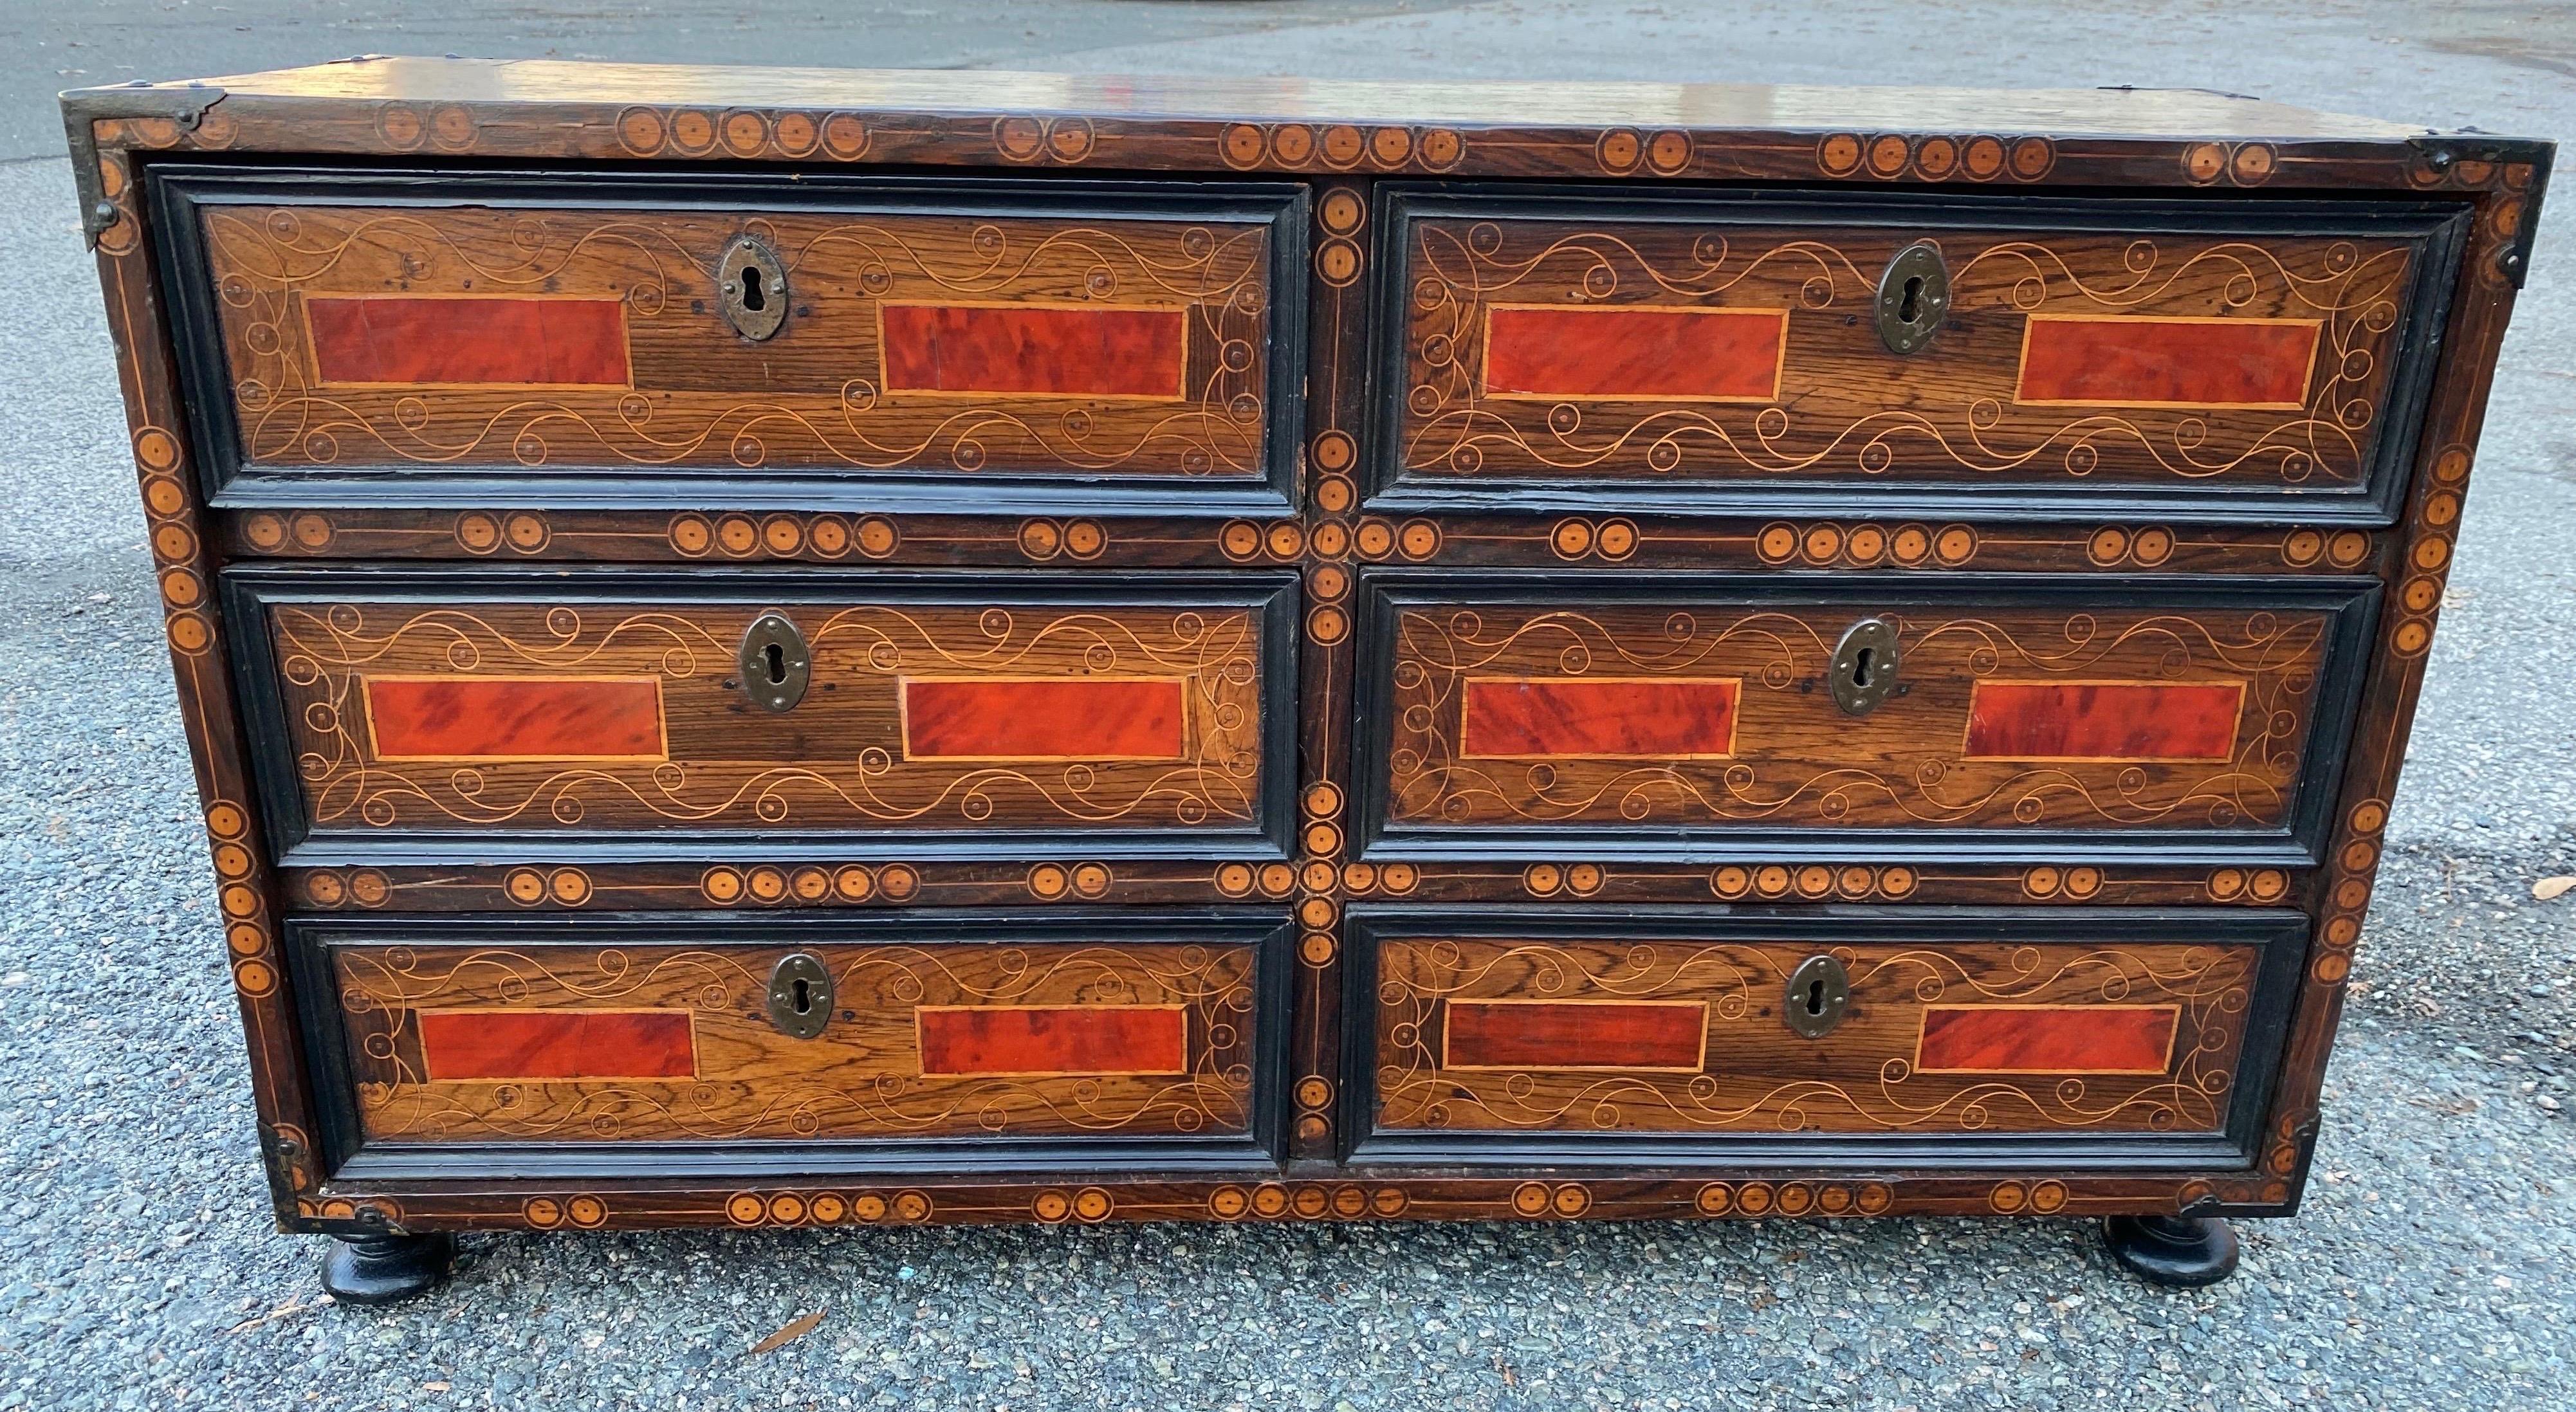 Early 18th century inlaid Italian walnut and tortoiseshell vargueno. 6 drawers with fine inlay, iron hardware.